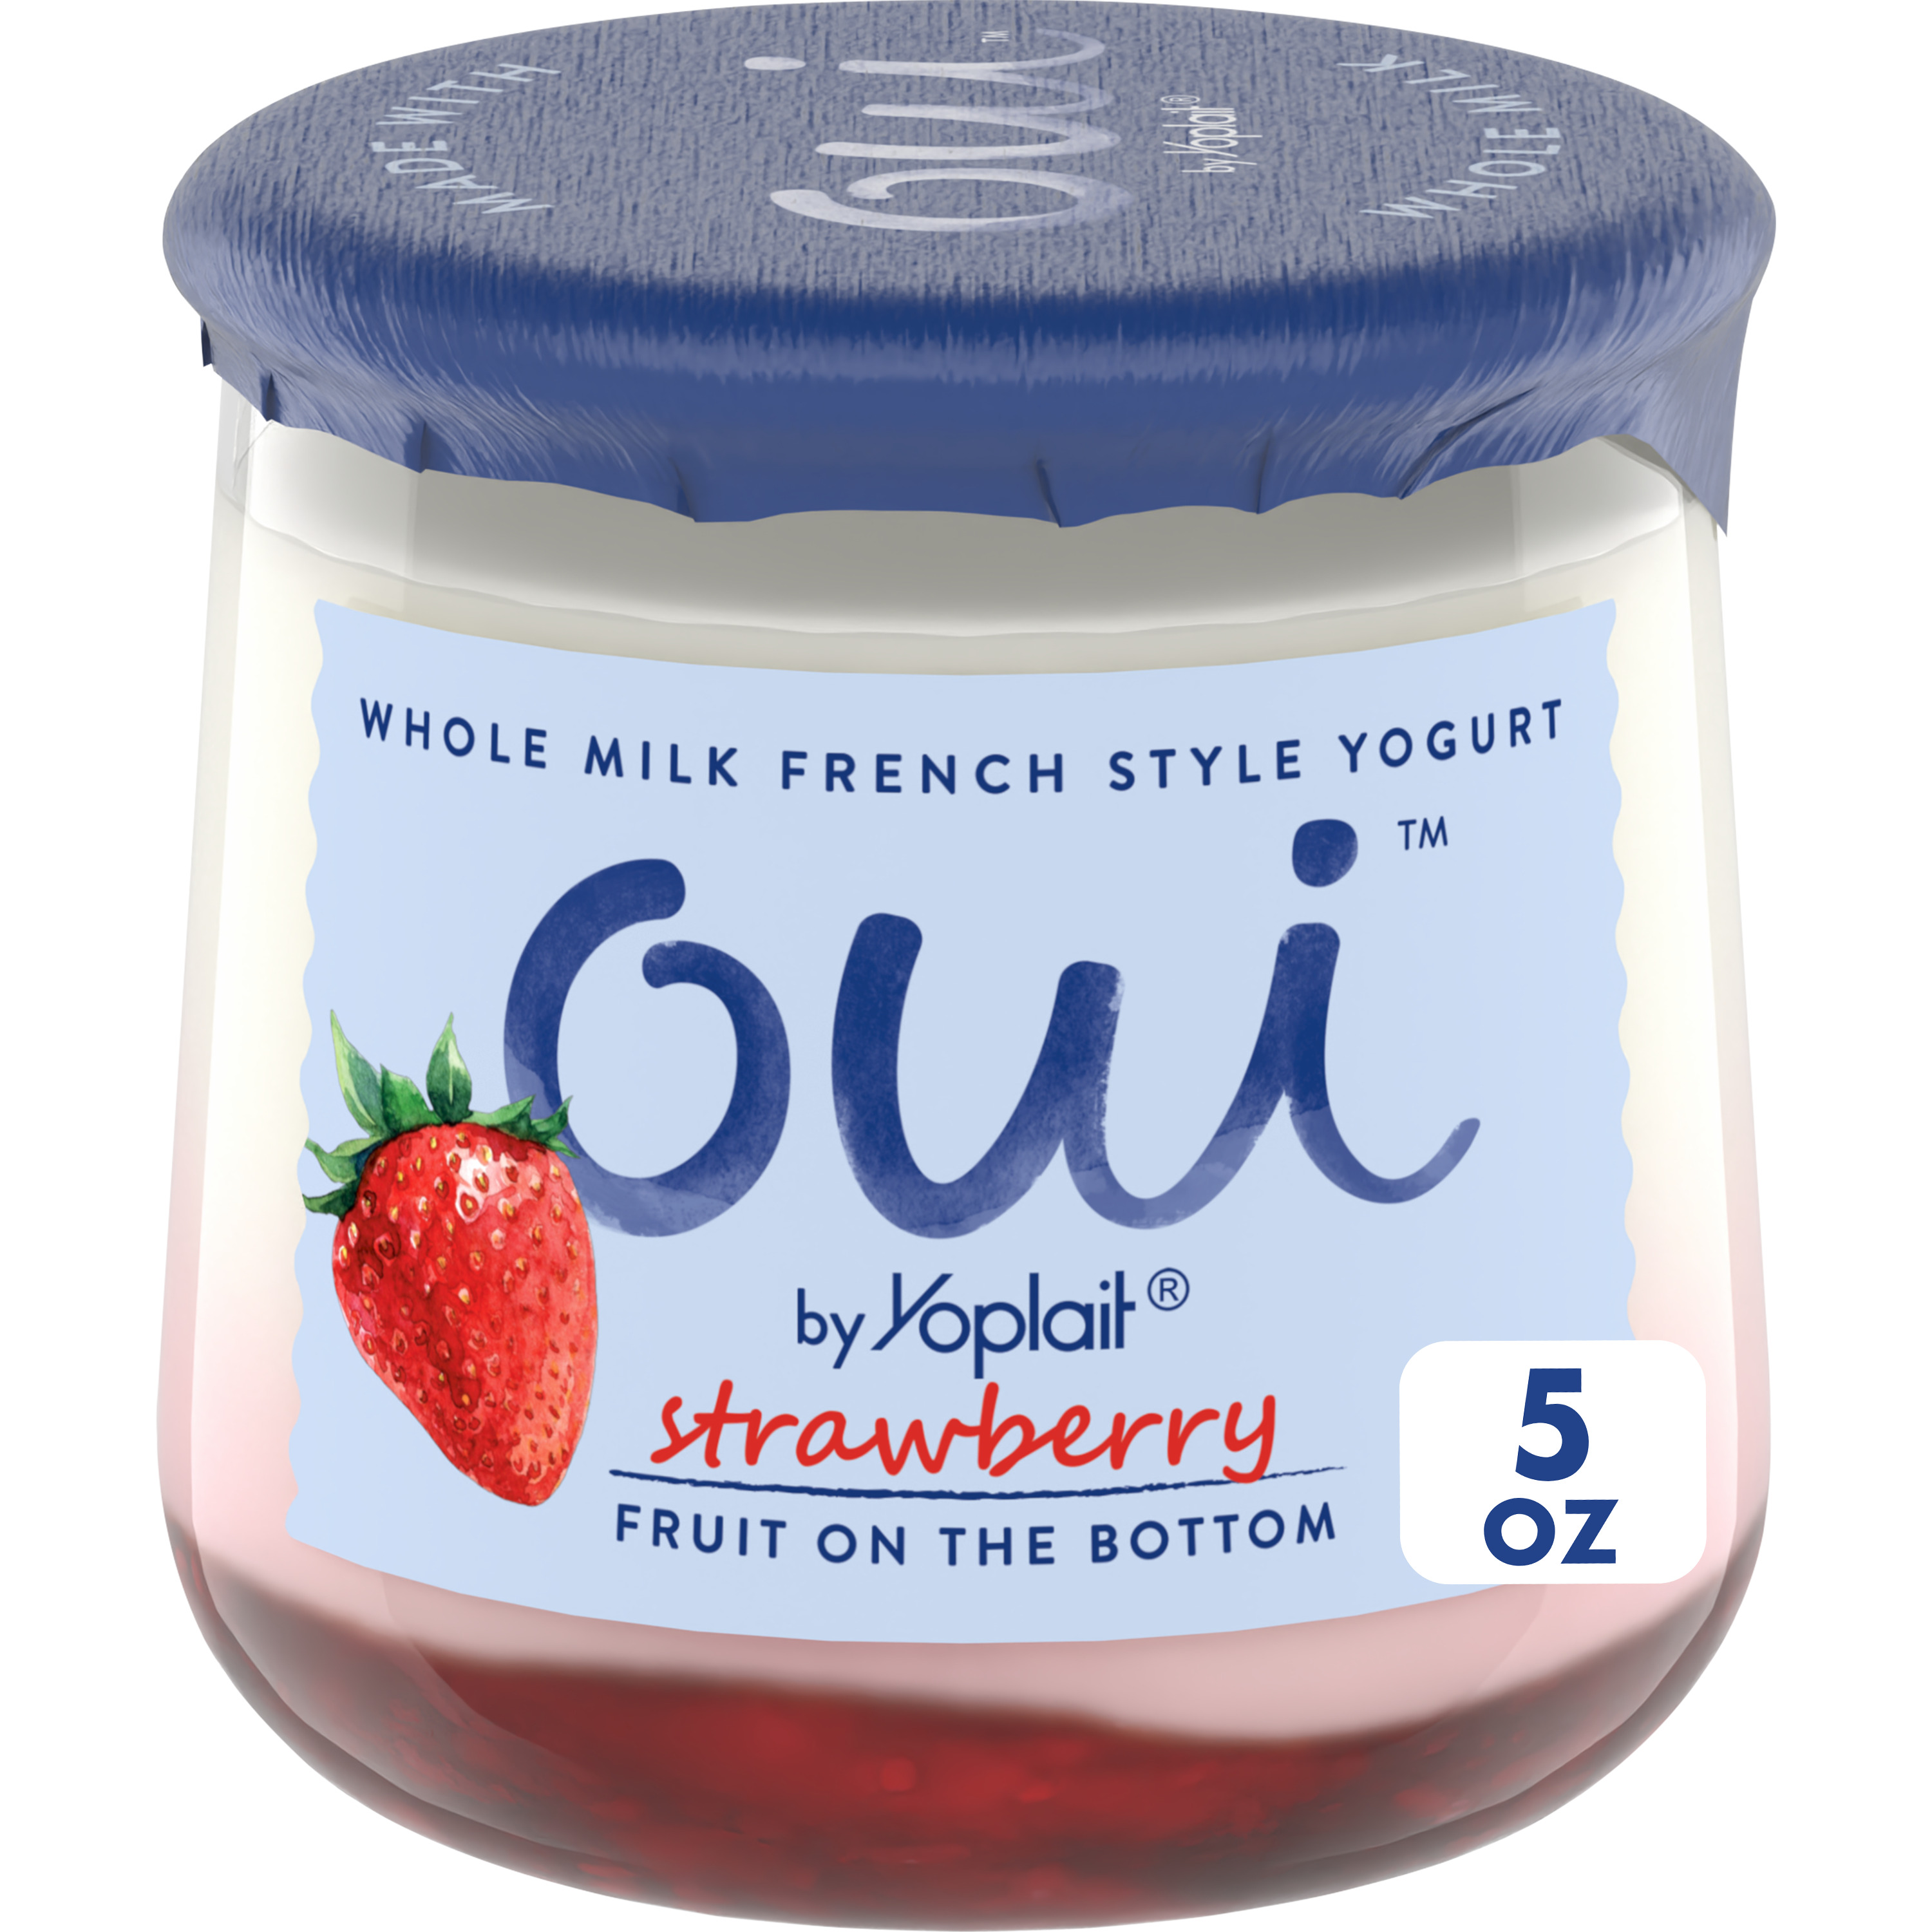 Oui by Yoplait French Style Strawberry Whole Milk Yogurt, 5 OZ Jar - image 1 of 9